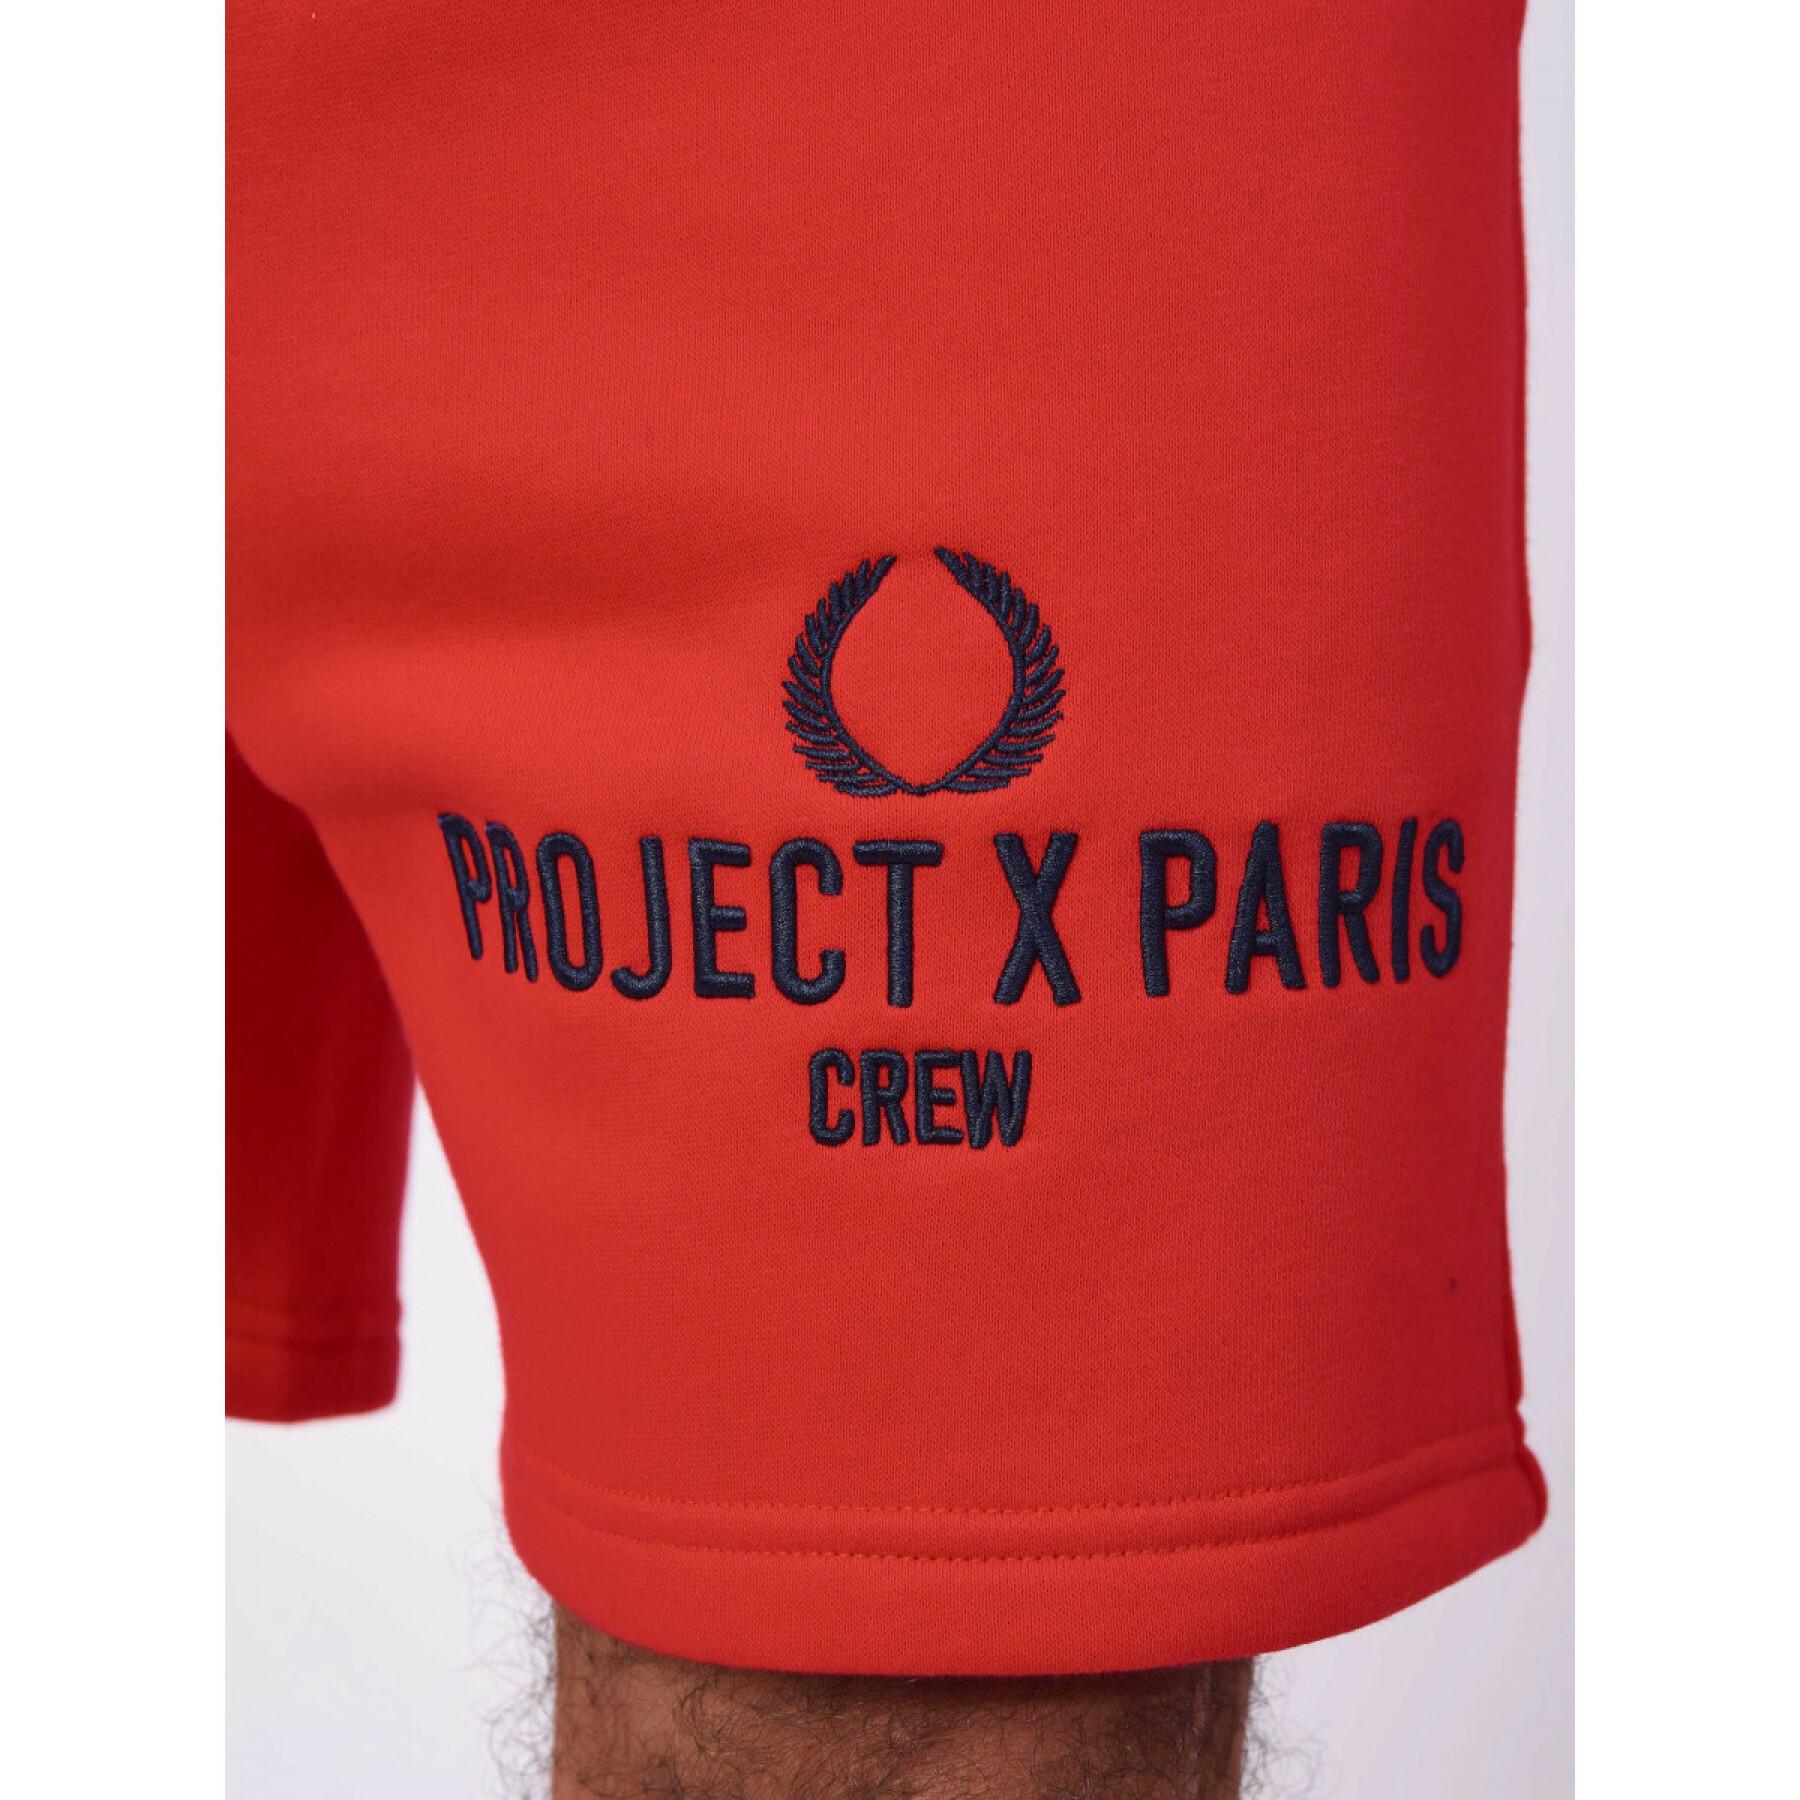 Short Project X Paris crew